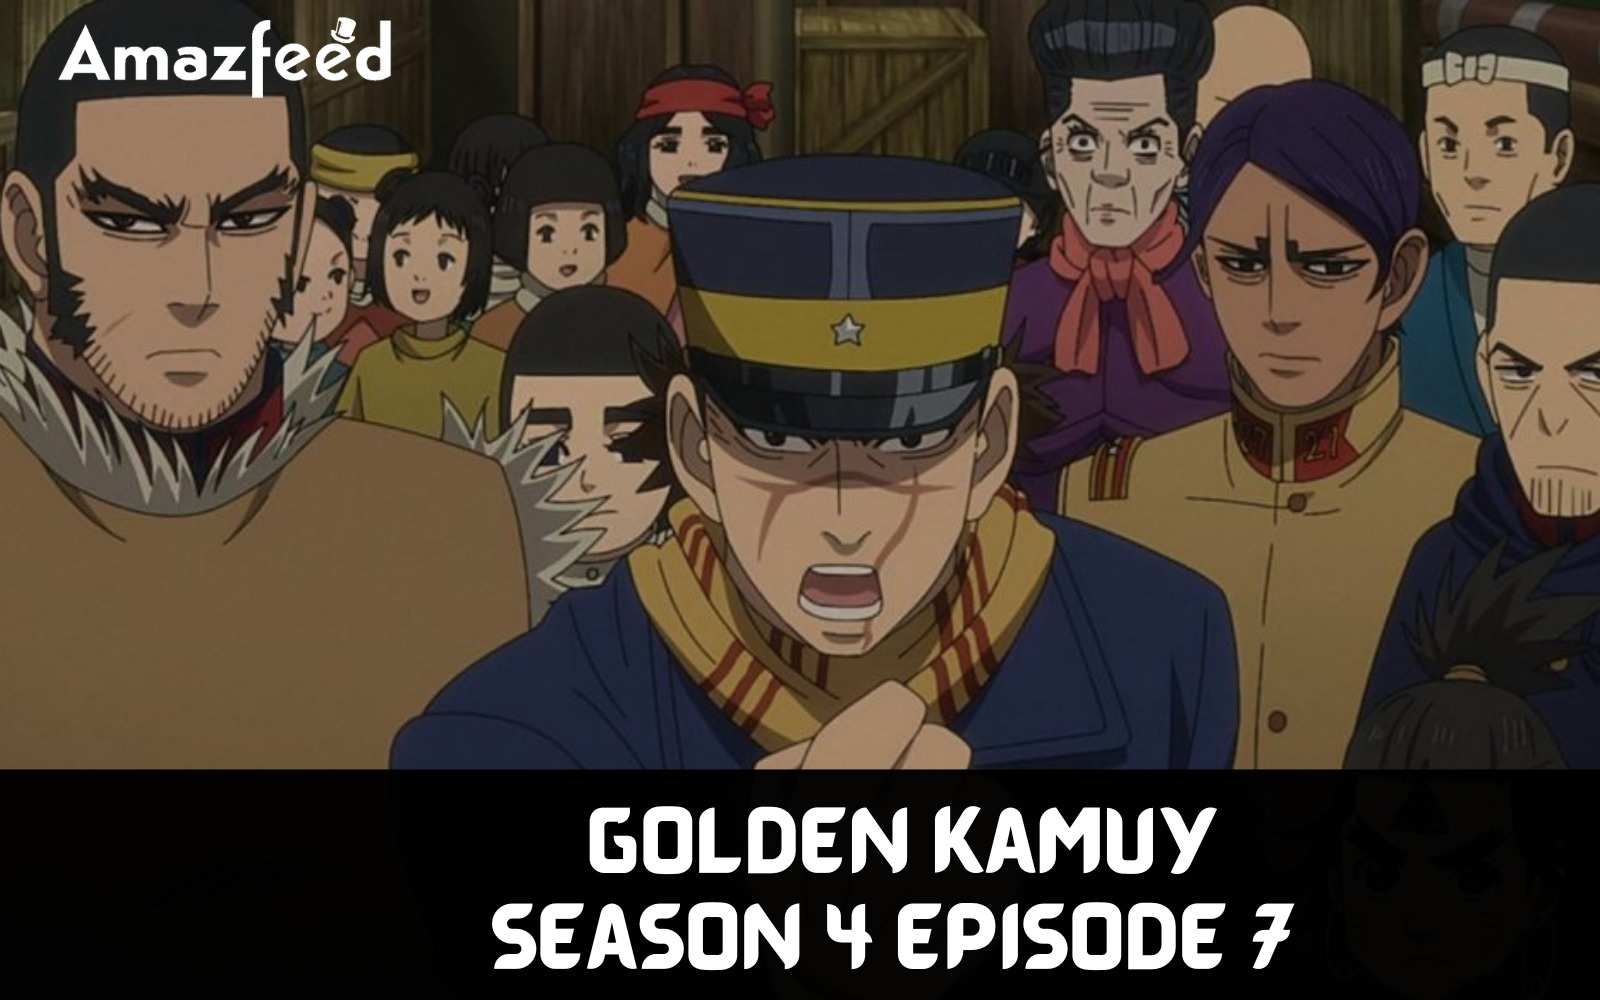 Golden Kamuy season 4 Episode 7 Countdown